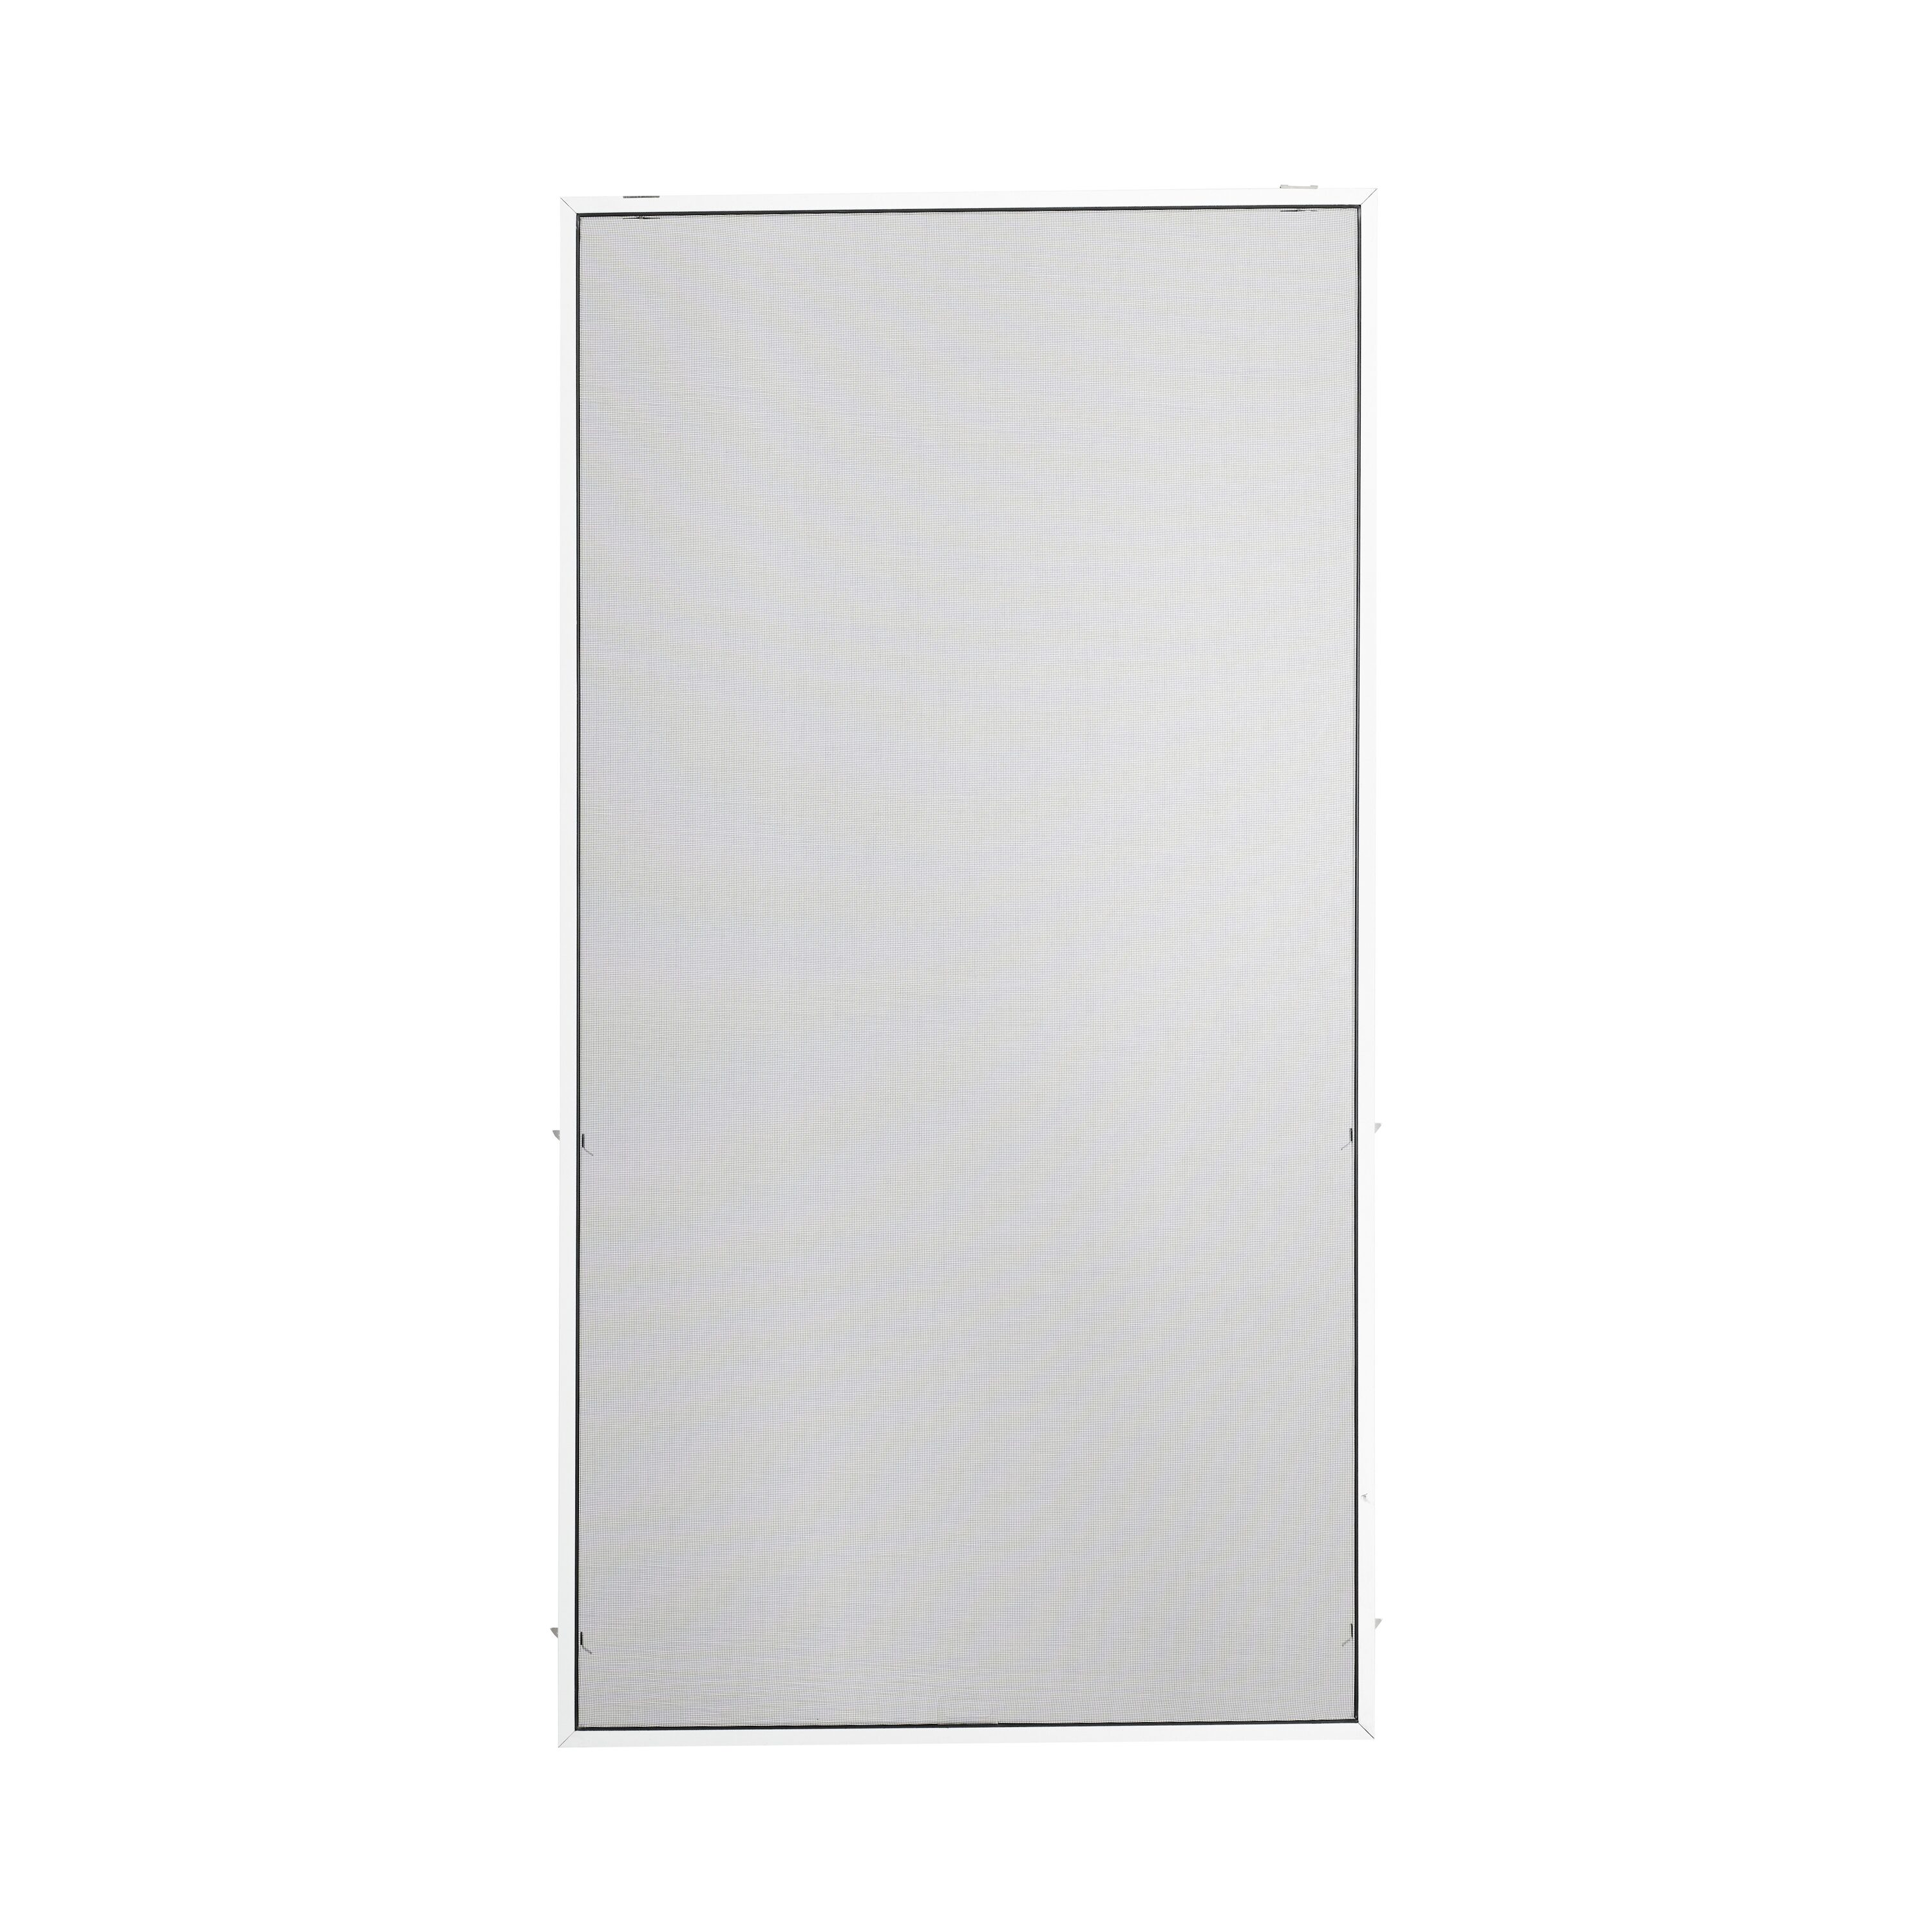 Pella Lifestyle 25.86-in x 36.375-in White Aluminum Frame Window